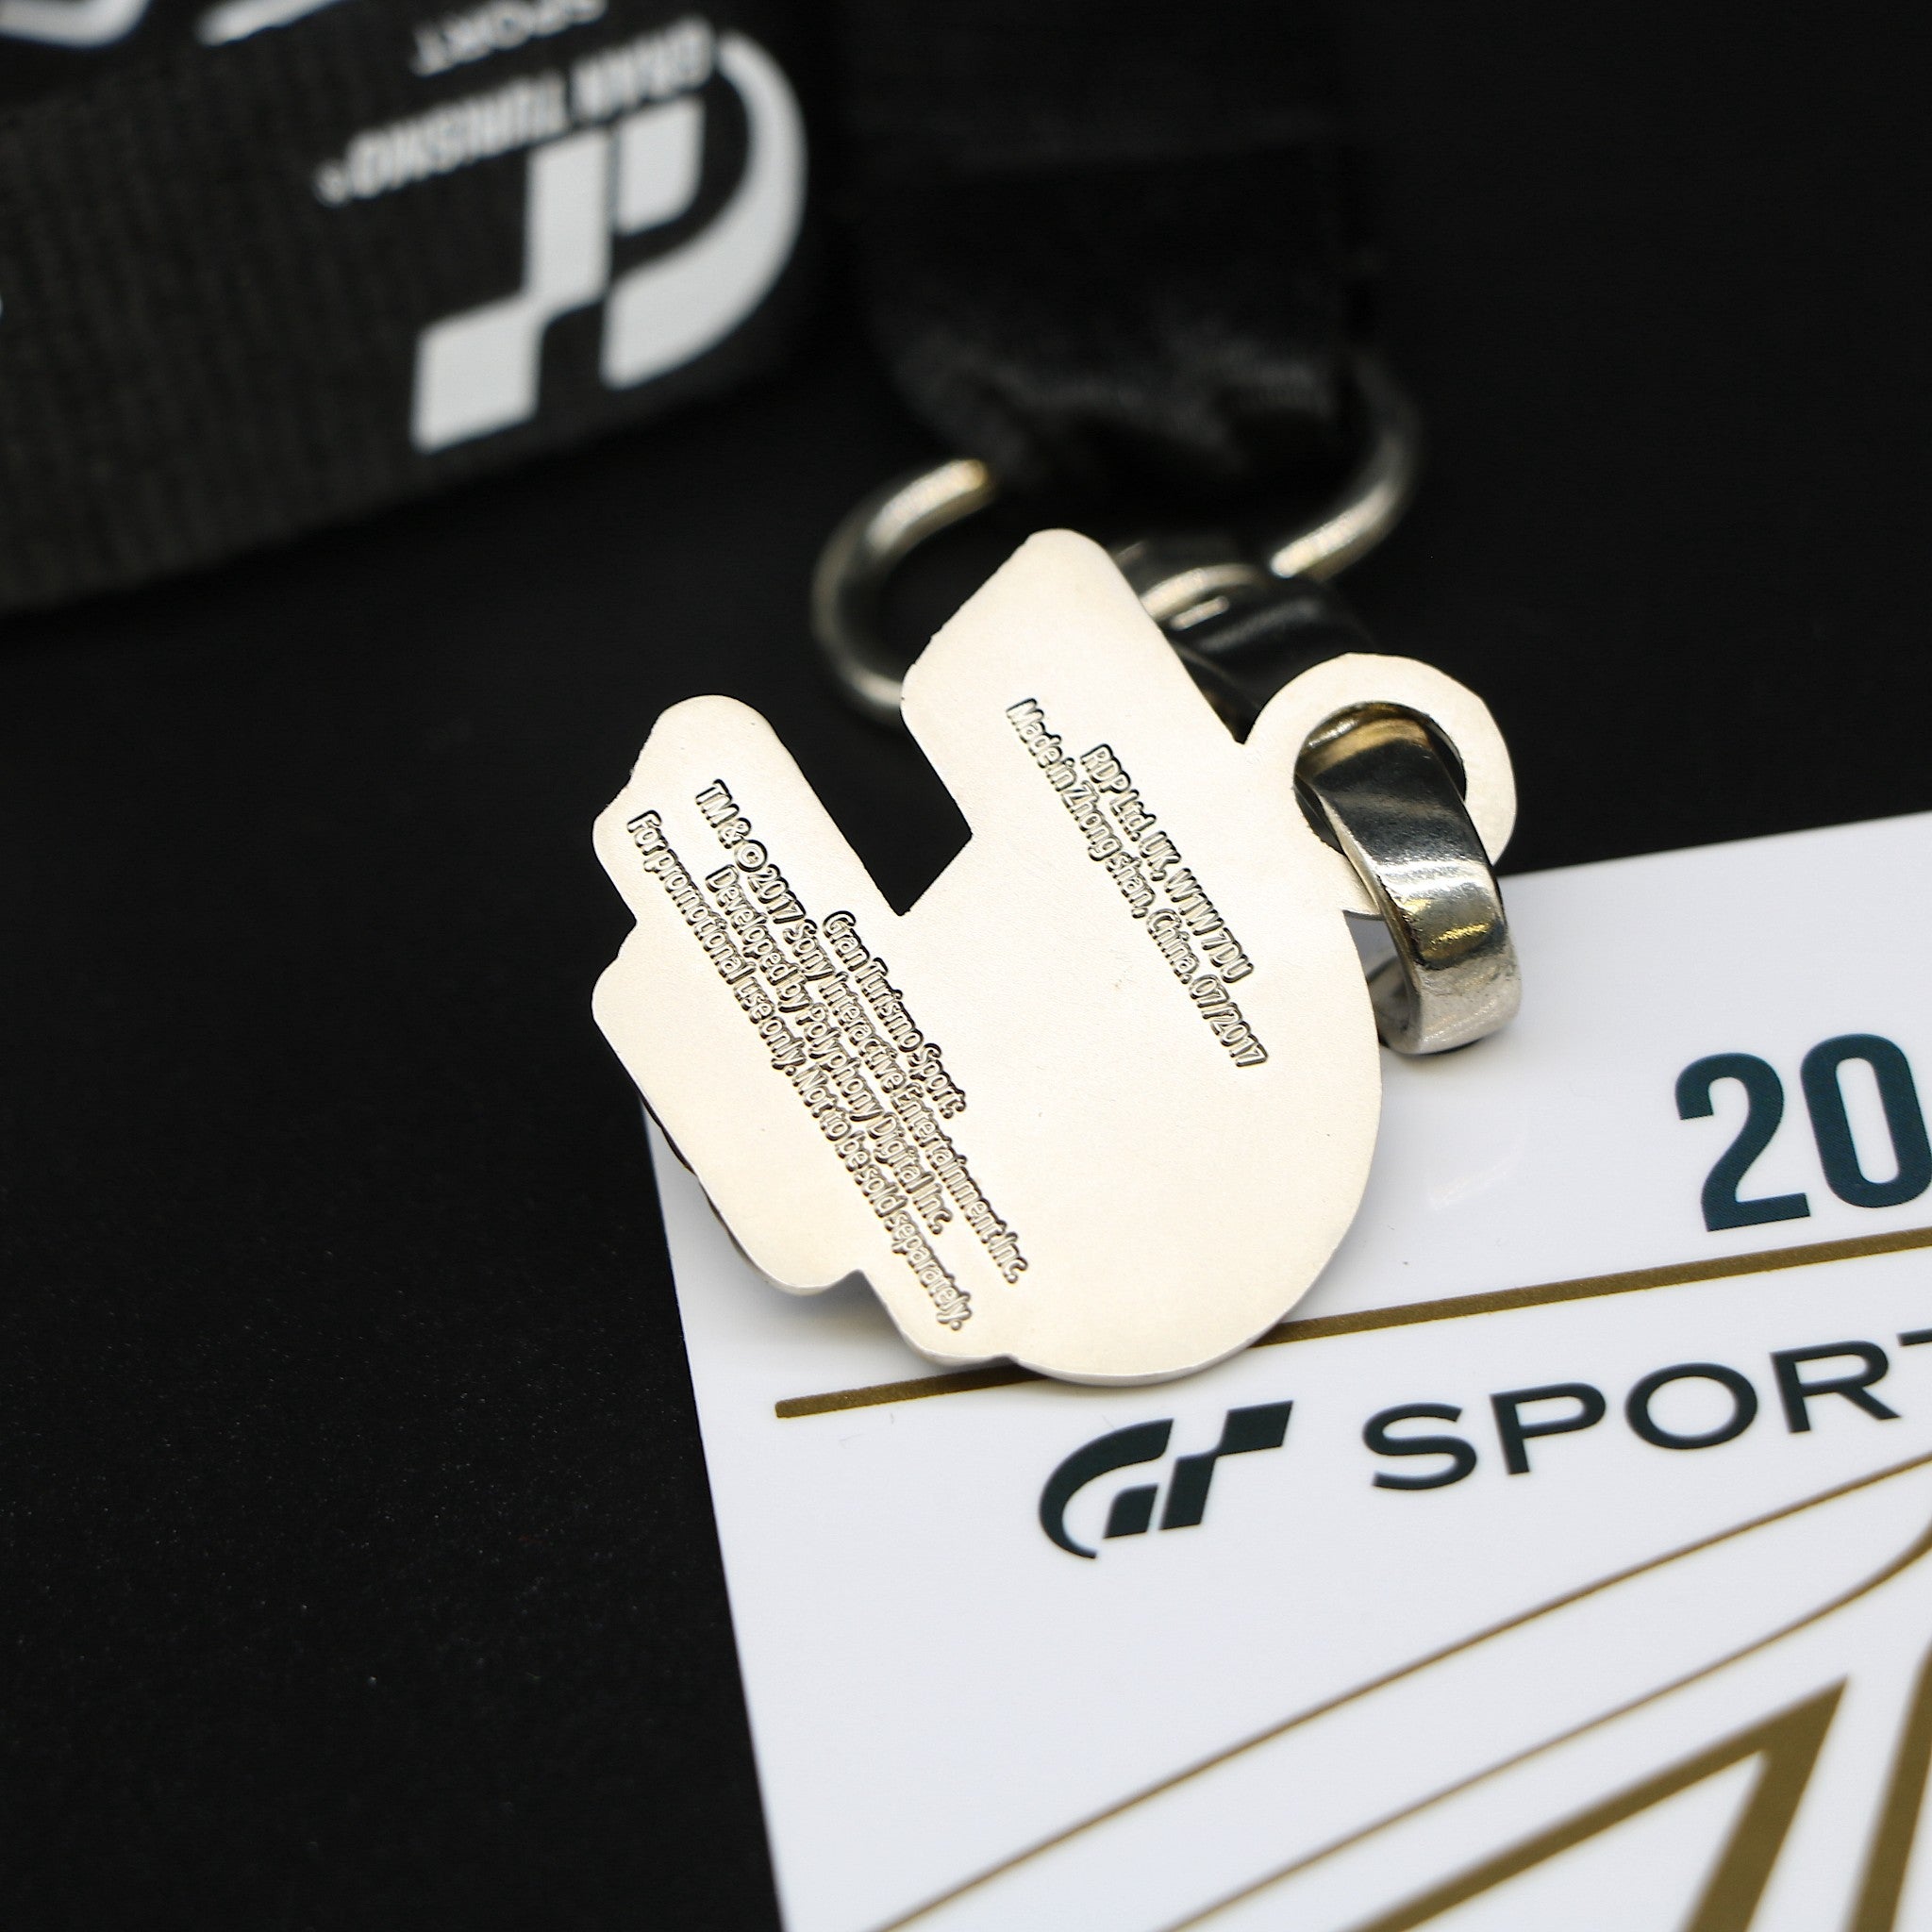 Gran Turismo Sport GT S Media Lanyard 2017 | Promo Press Merchandise